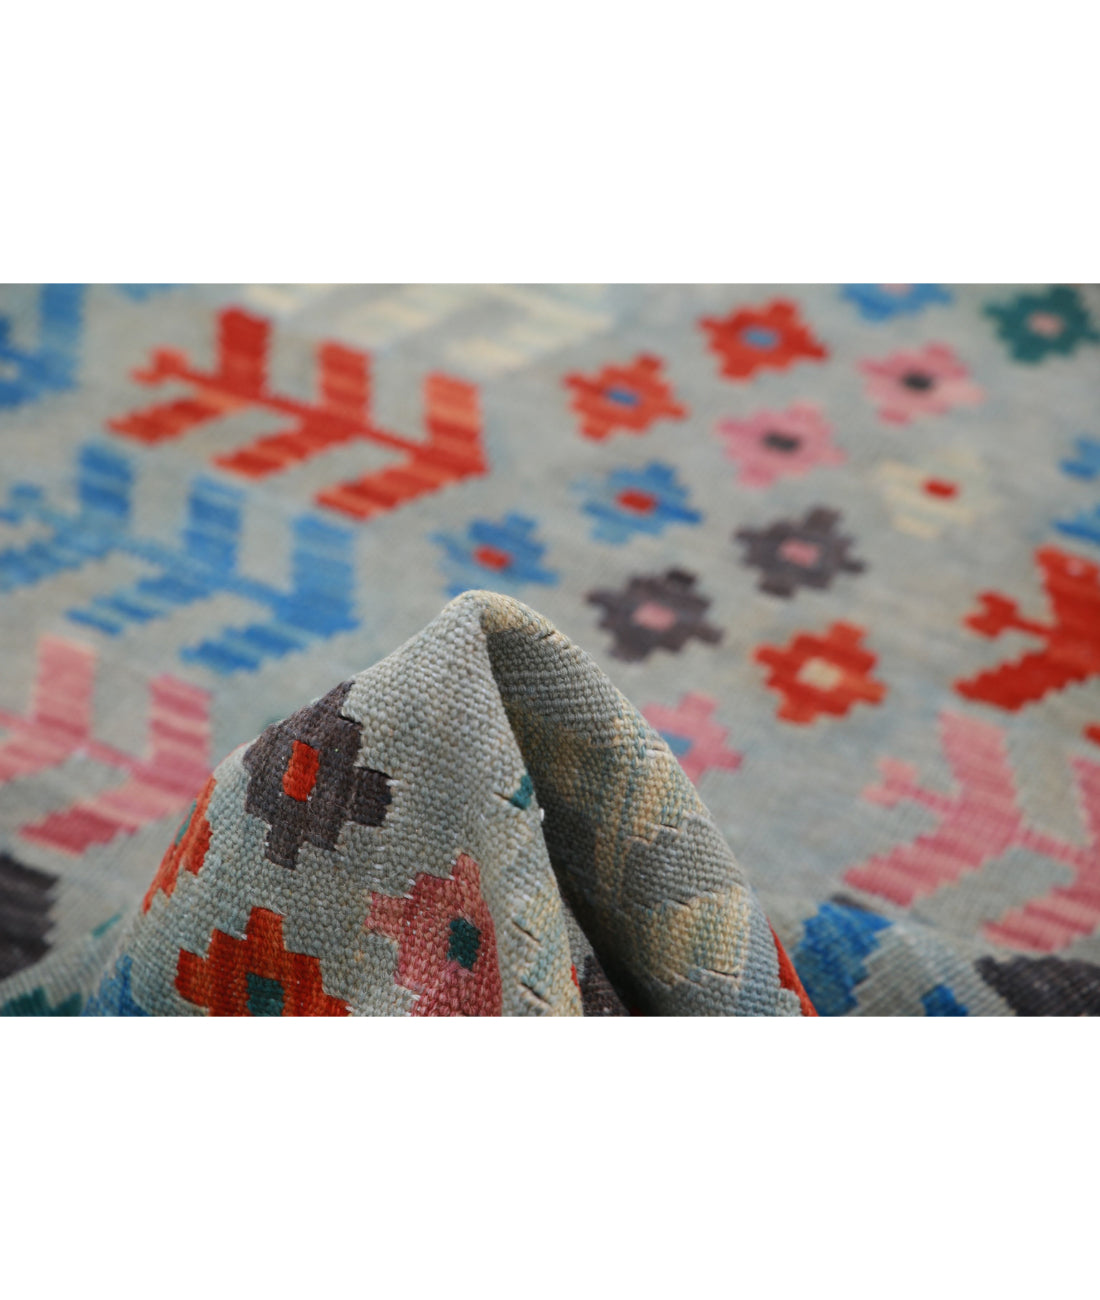 Hand Knotted Maimana Kilim Wool Kilim Rug - 2'6'' x 4'0'' 2'6'' x 4'0'' (75 X 120) / Multi / Multi